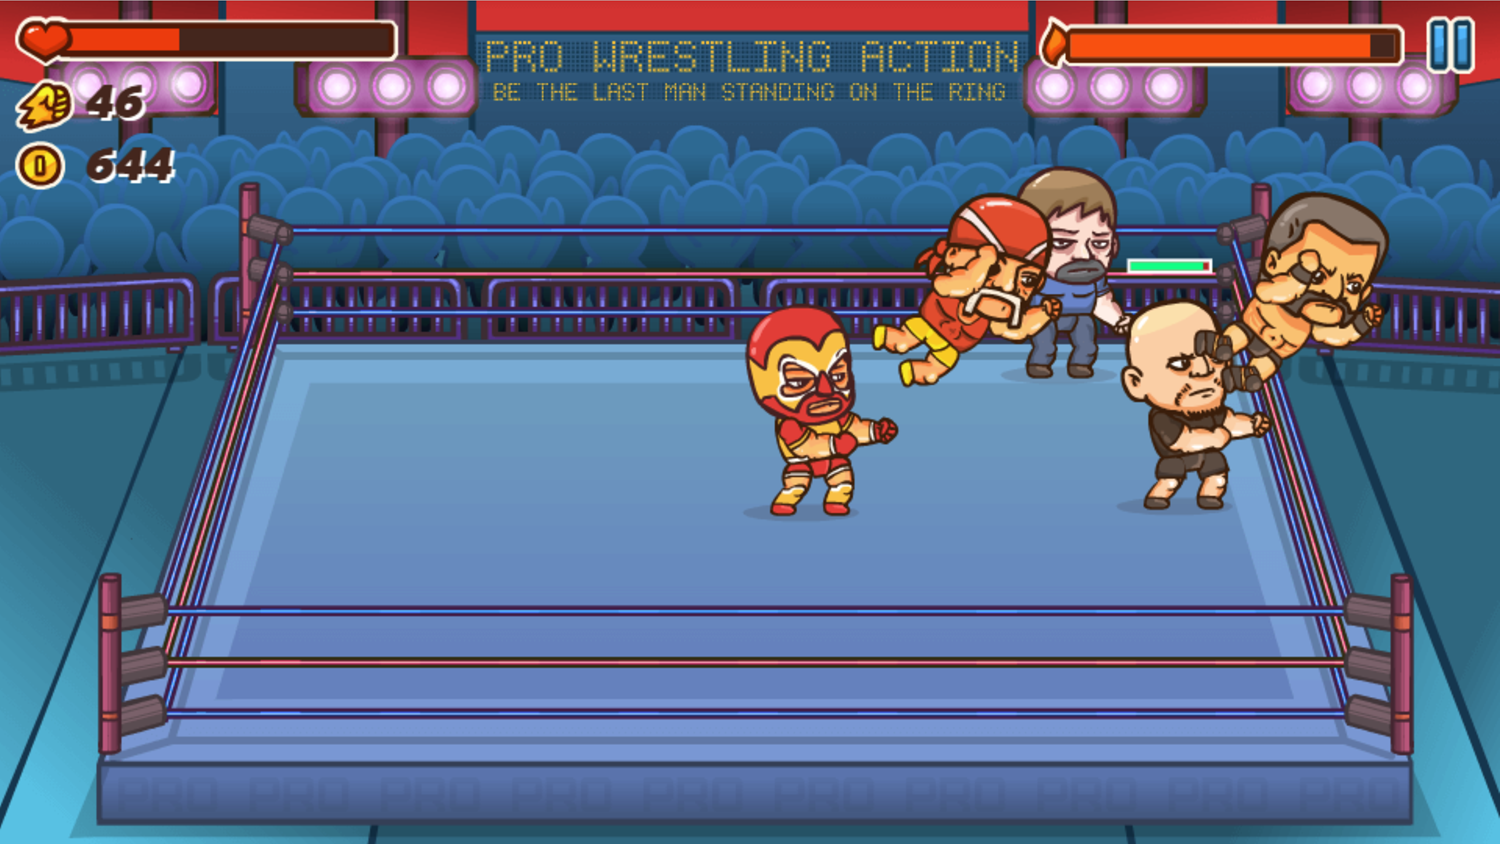 Pro Wrestling Action Game Screenshot.